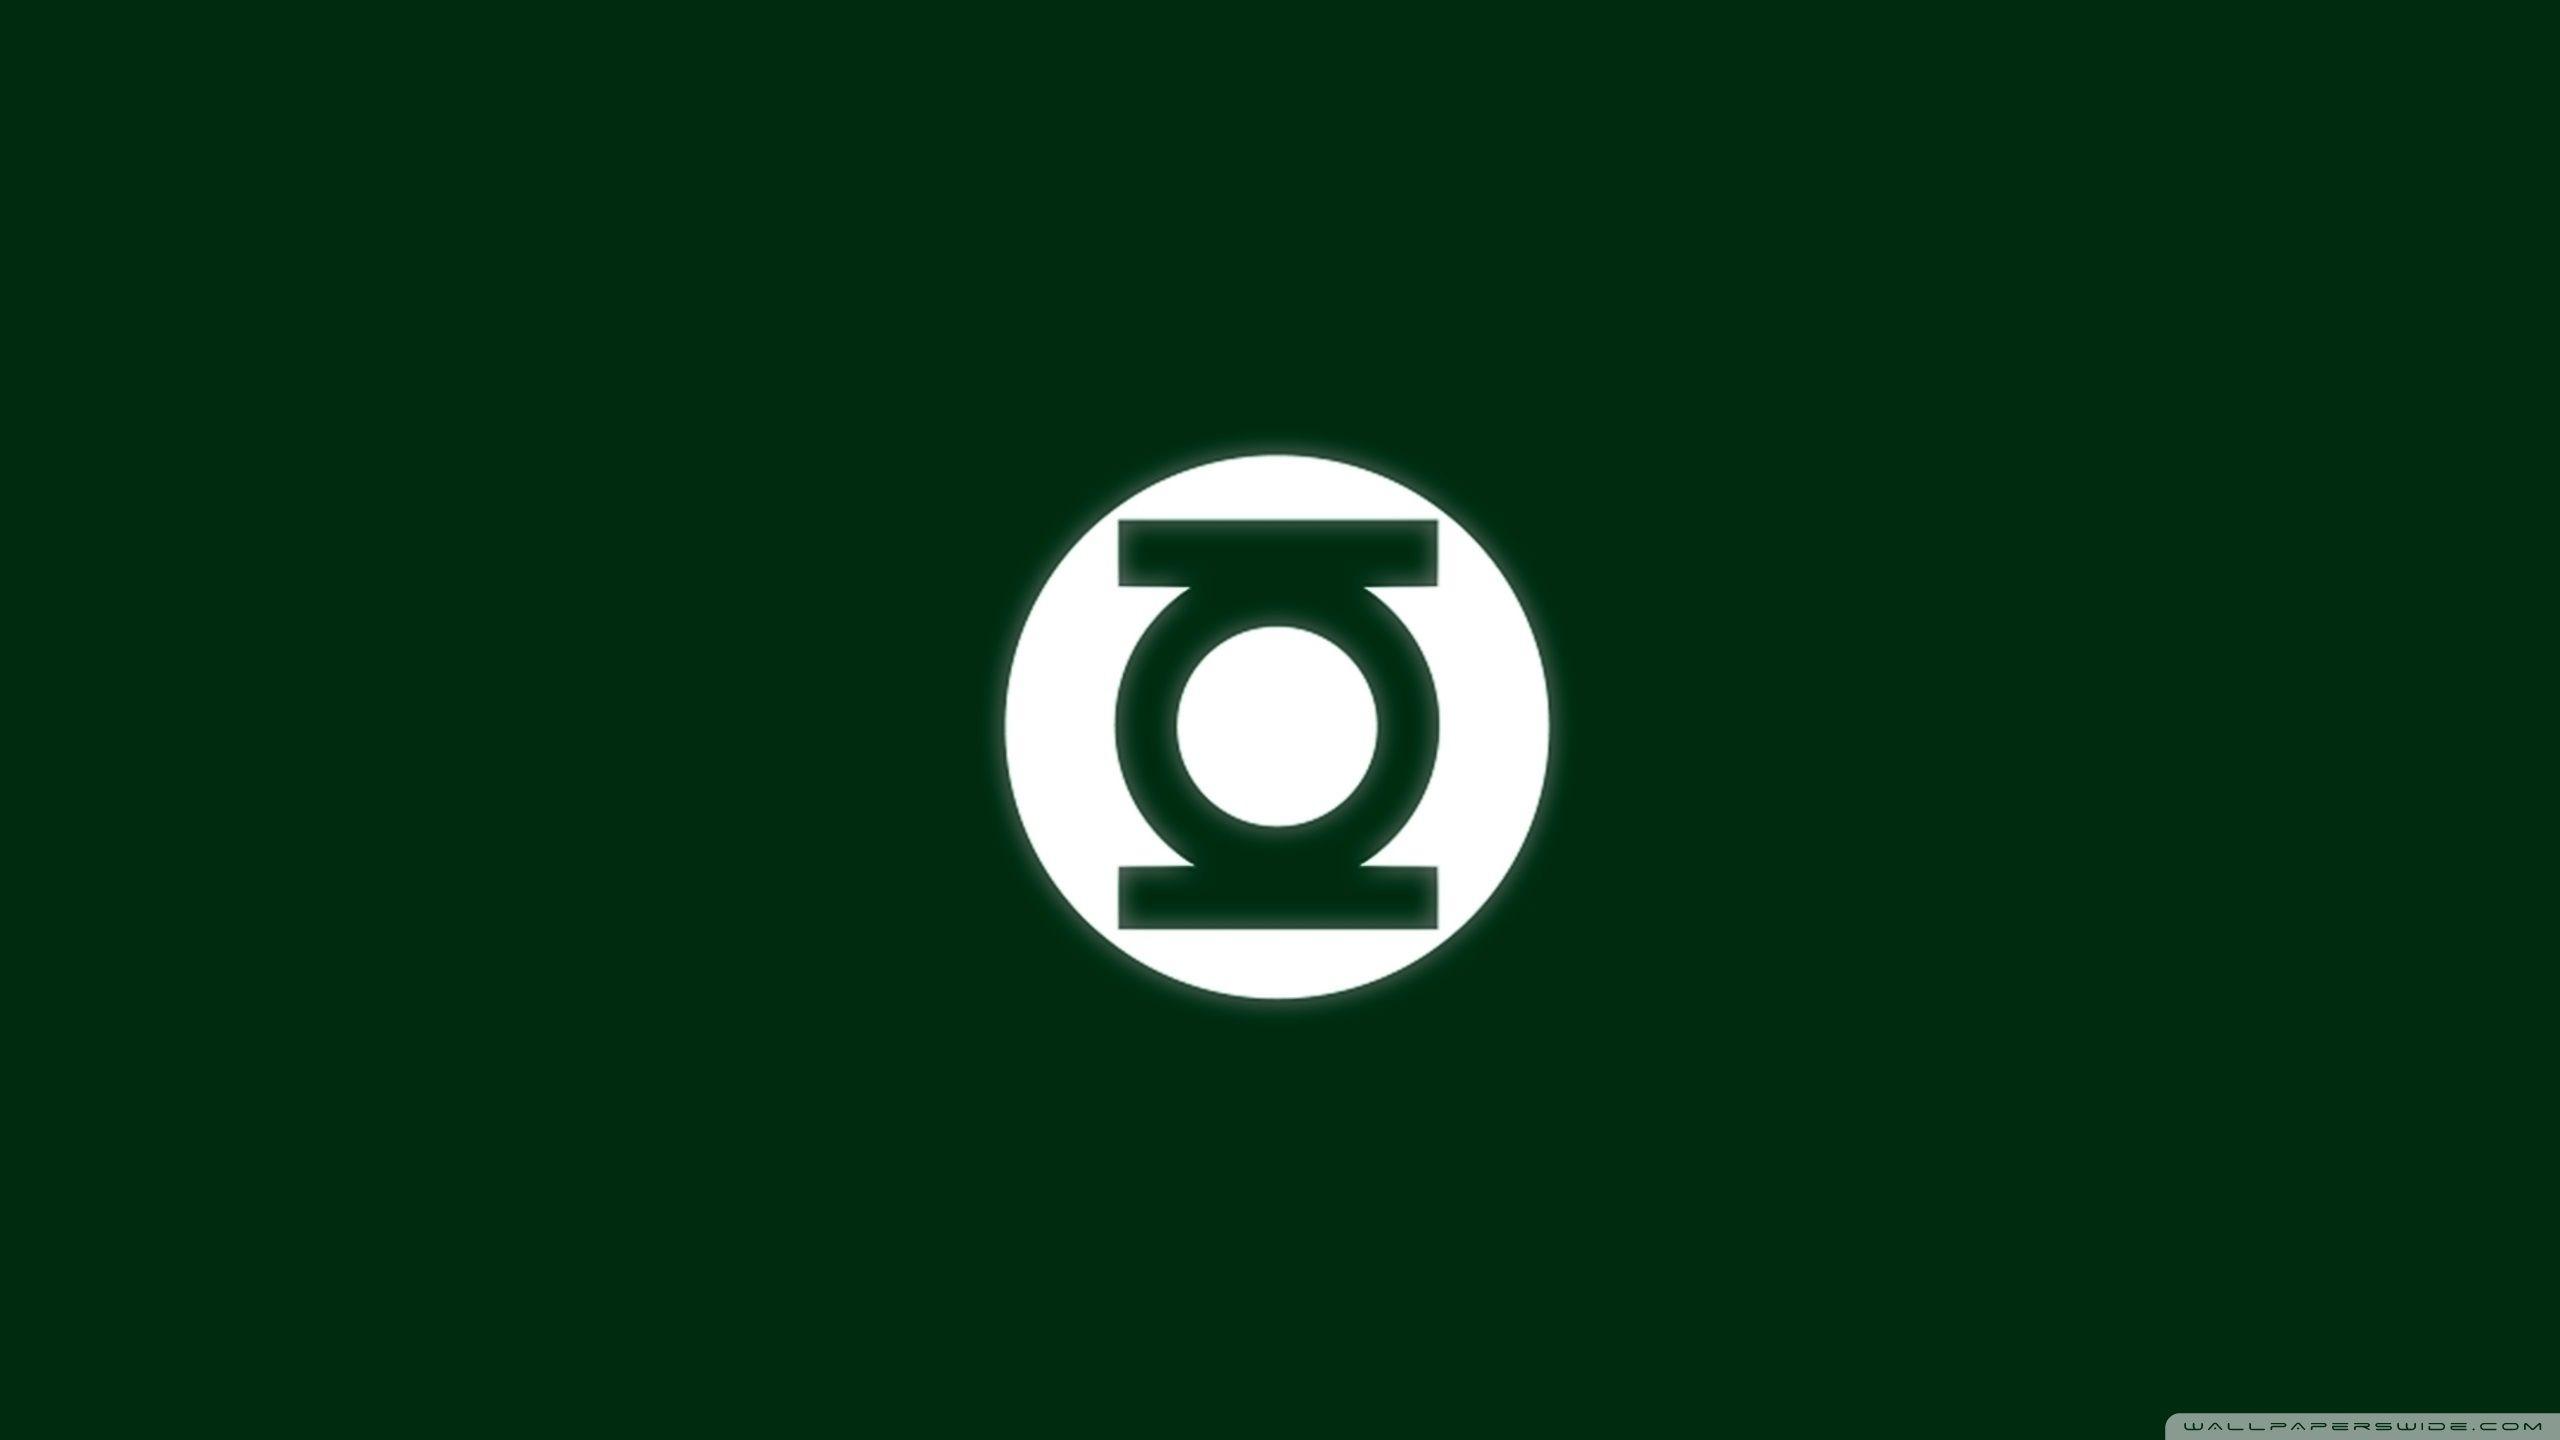 Top Green Lantern Logo Wallpaper FULL HD 1920×1080 For PC